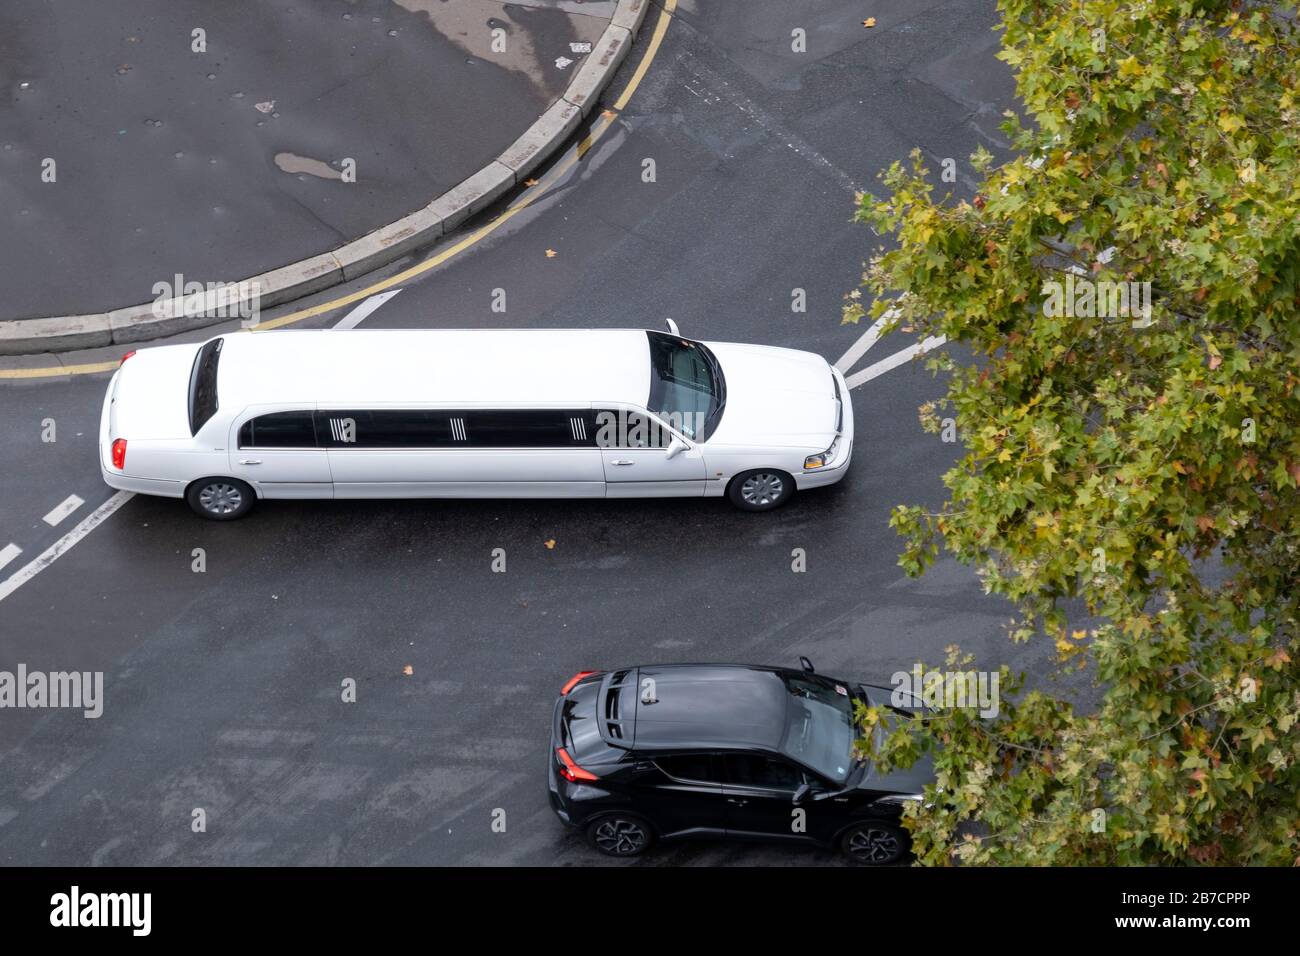 Vista aerea di una limousine bianca Foto Stock